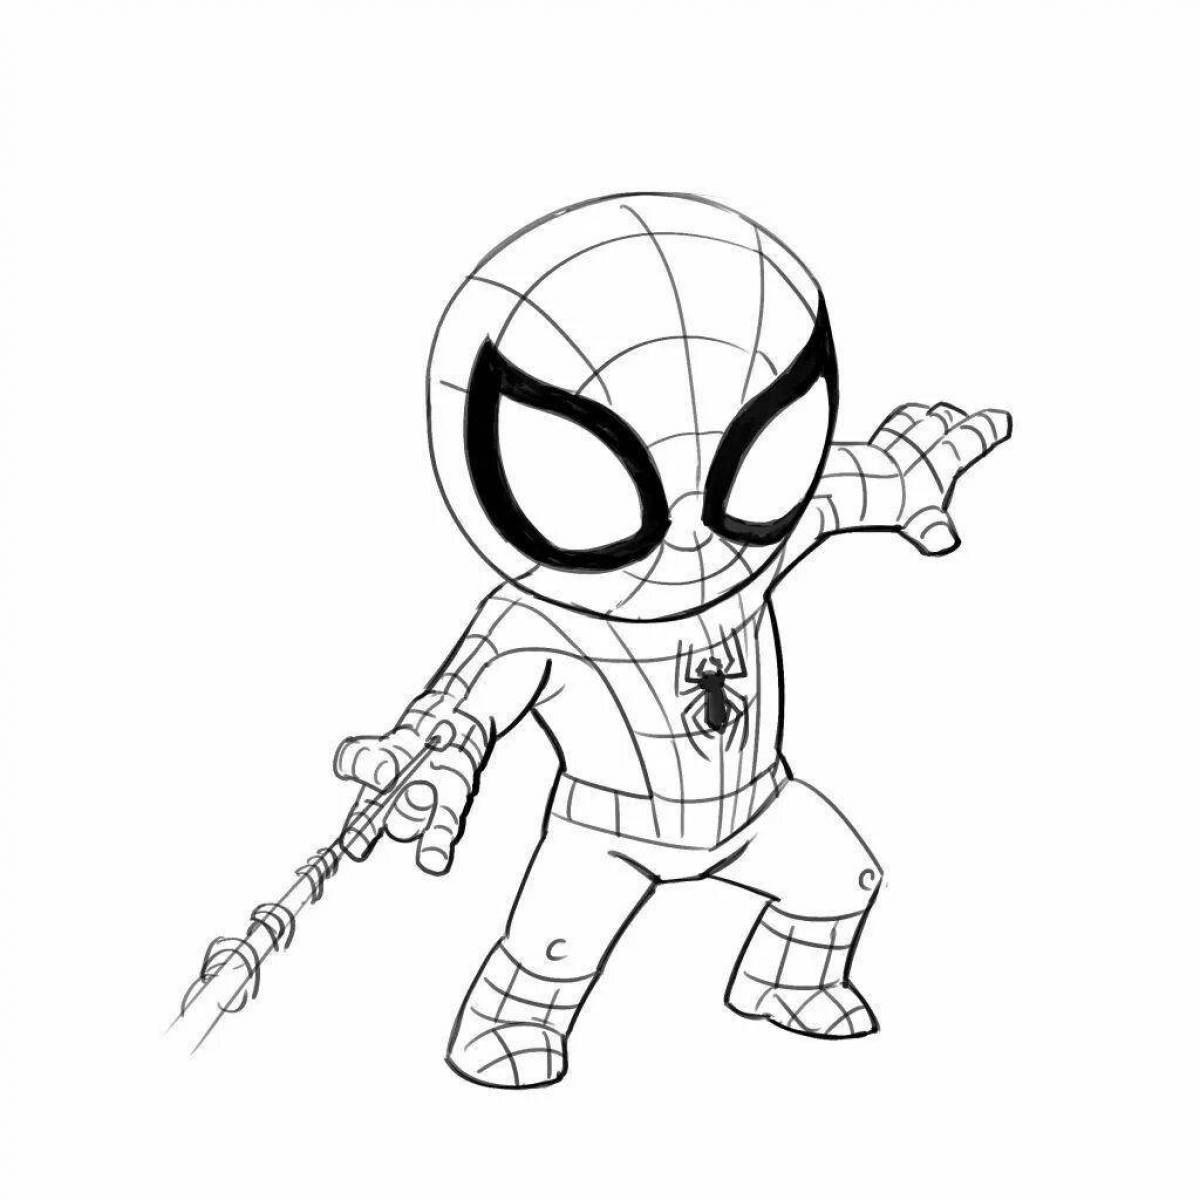 Animated little spiderman